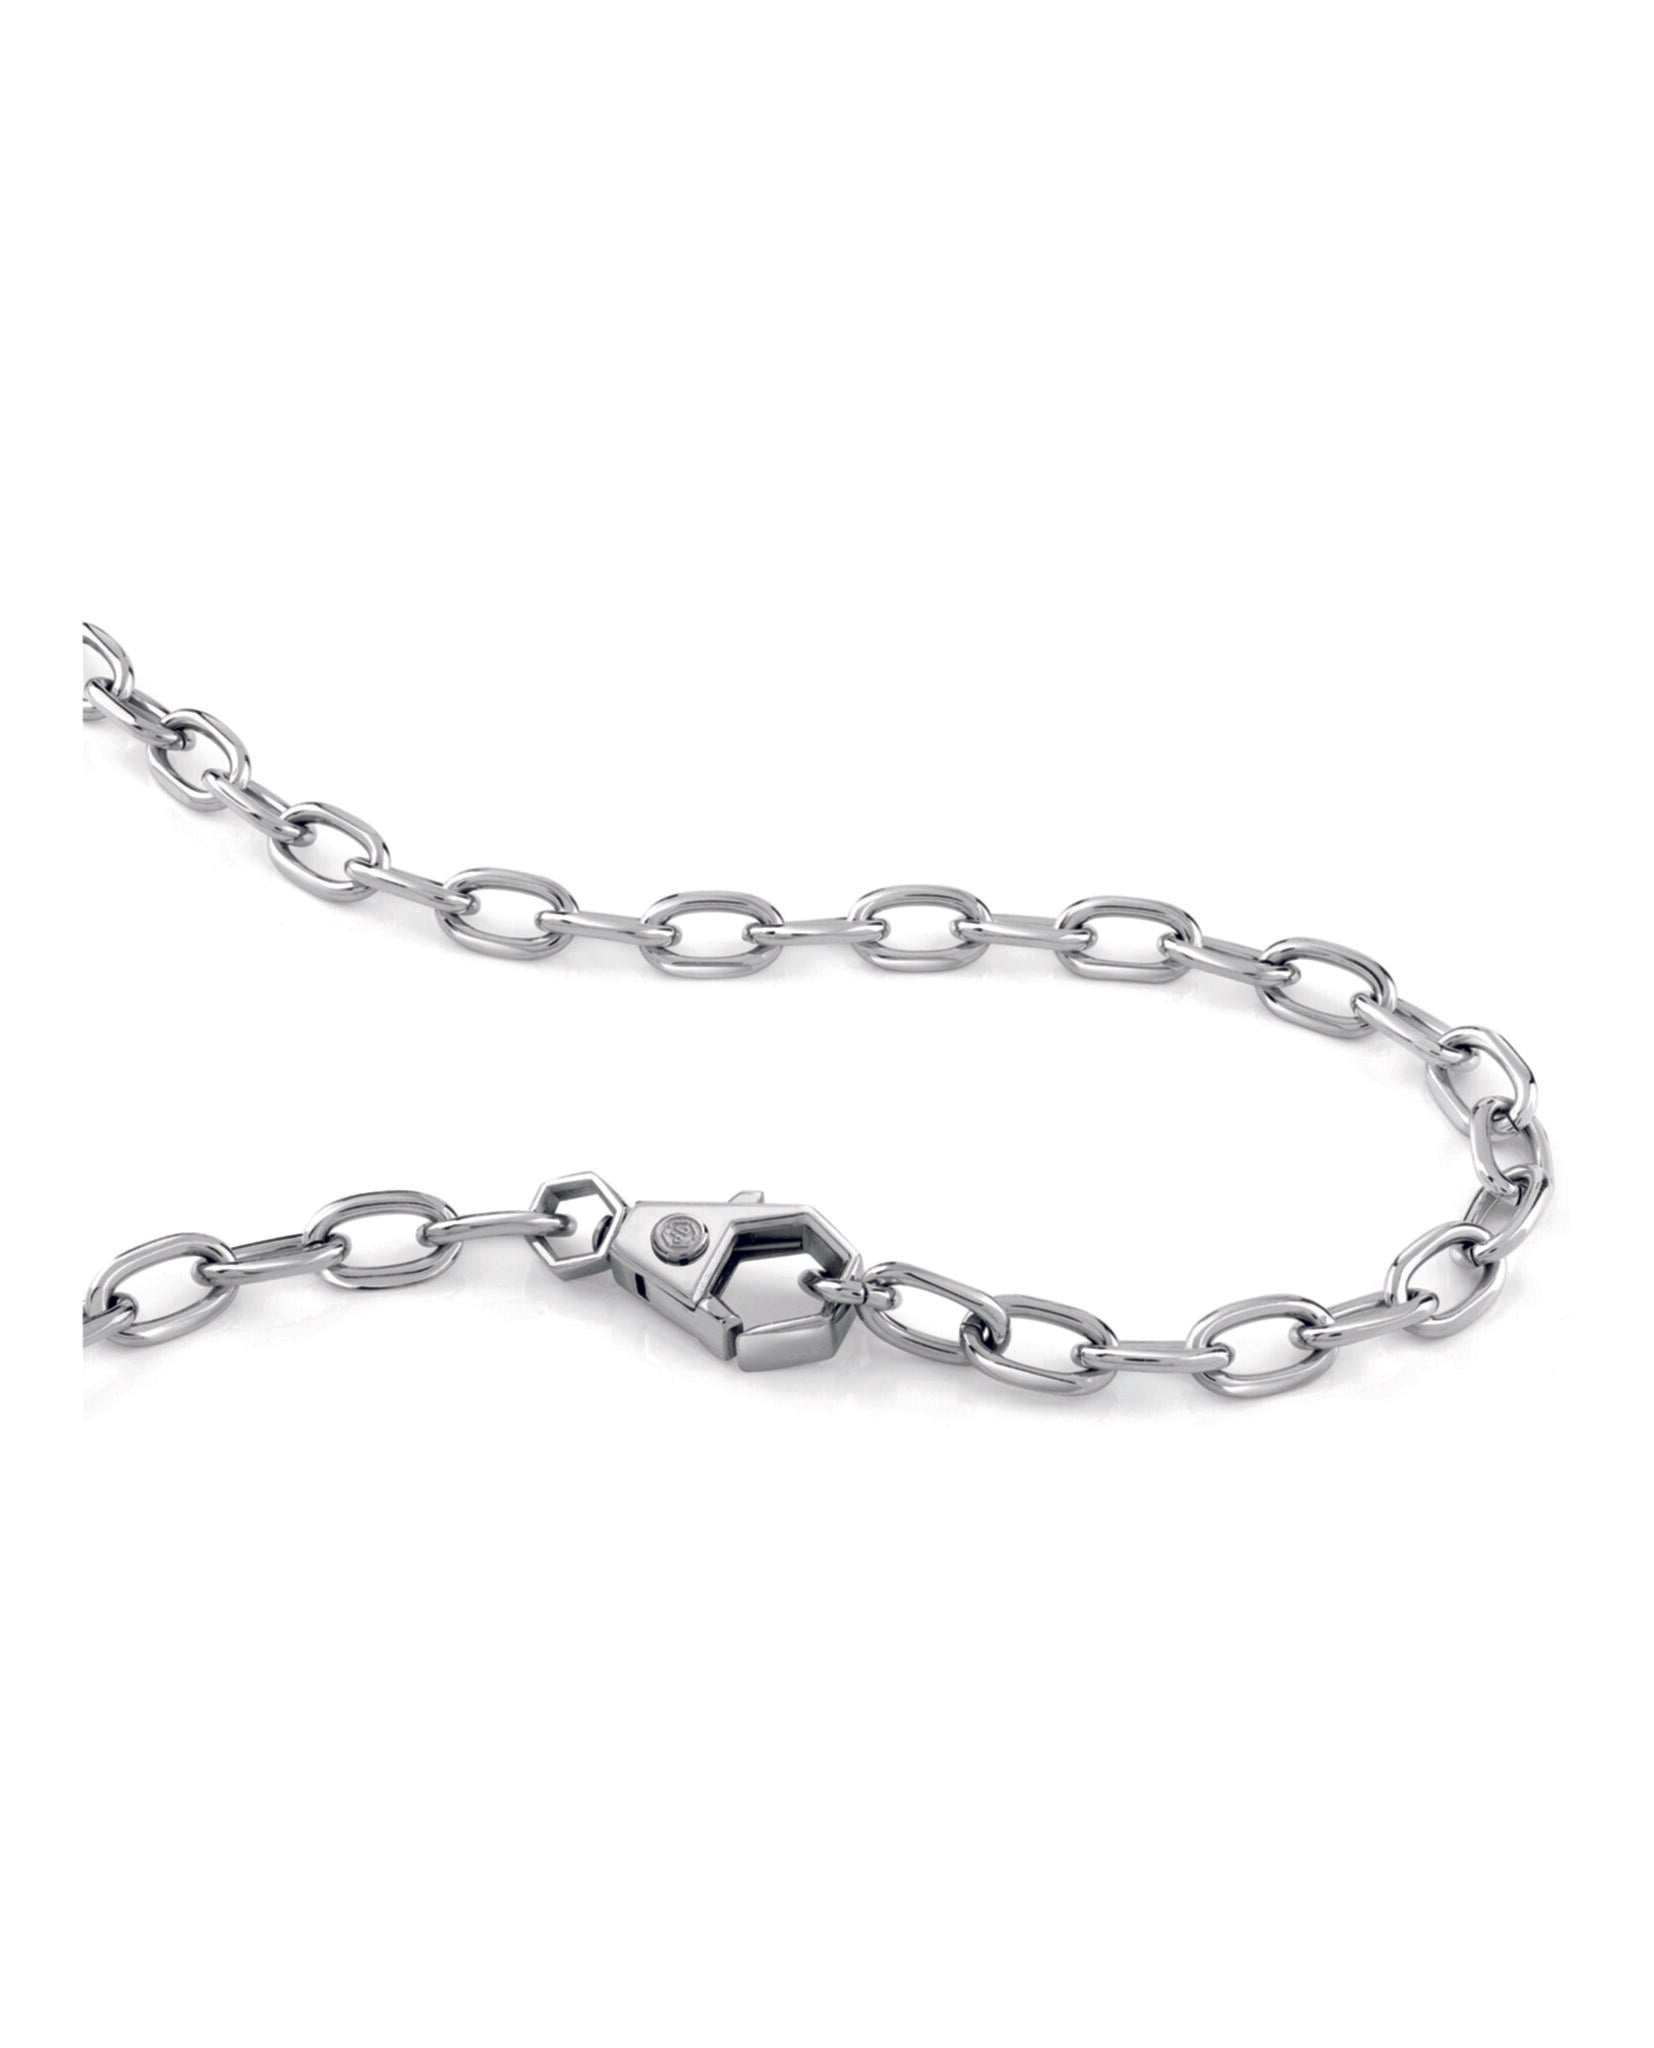 Plein Icon Chain Necklace